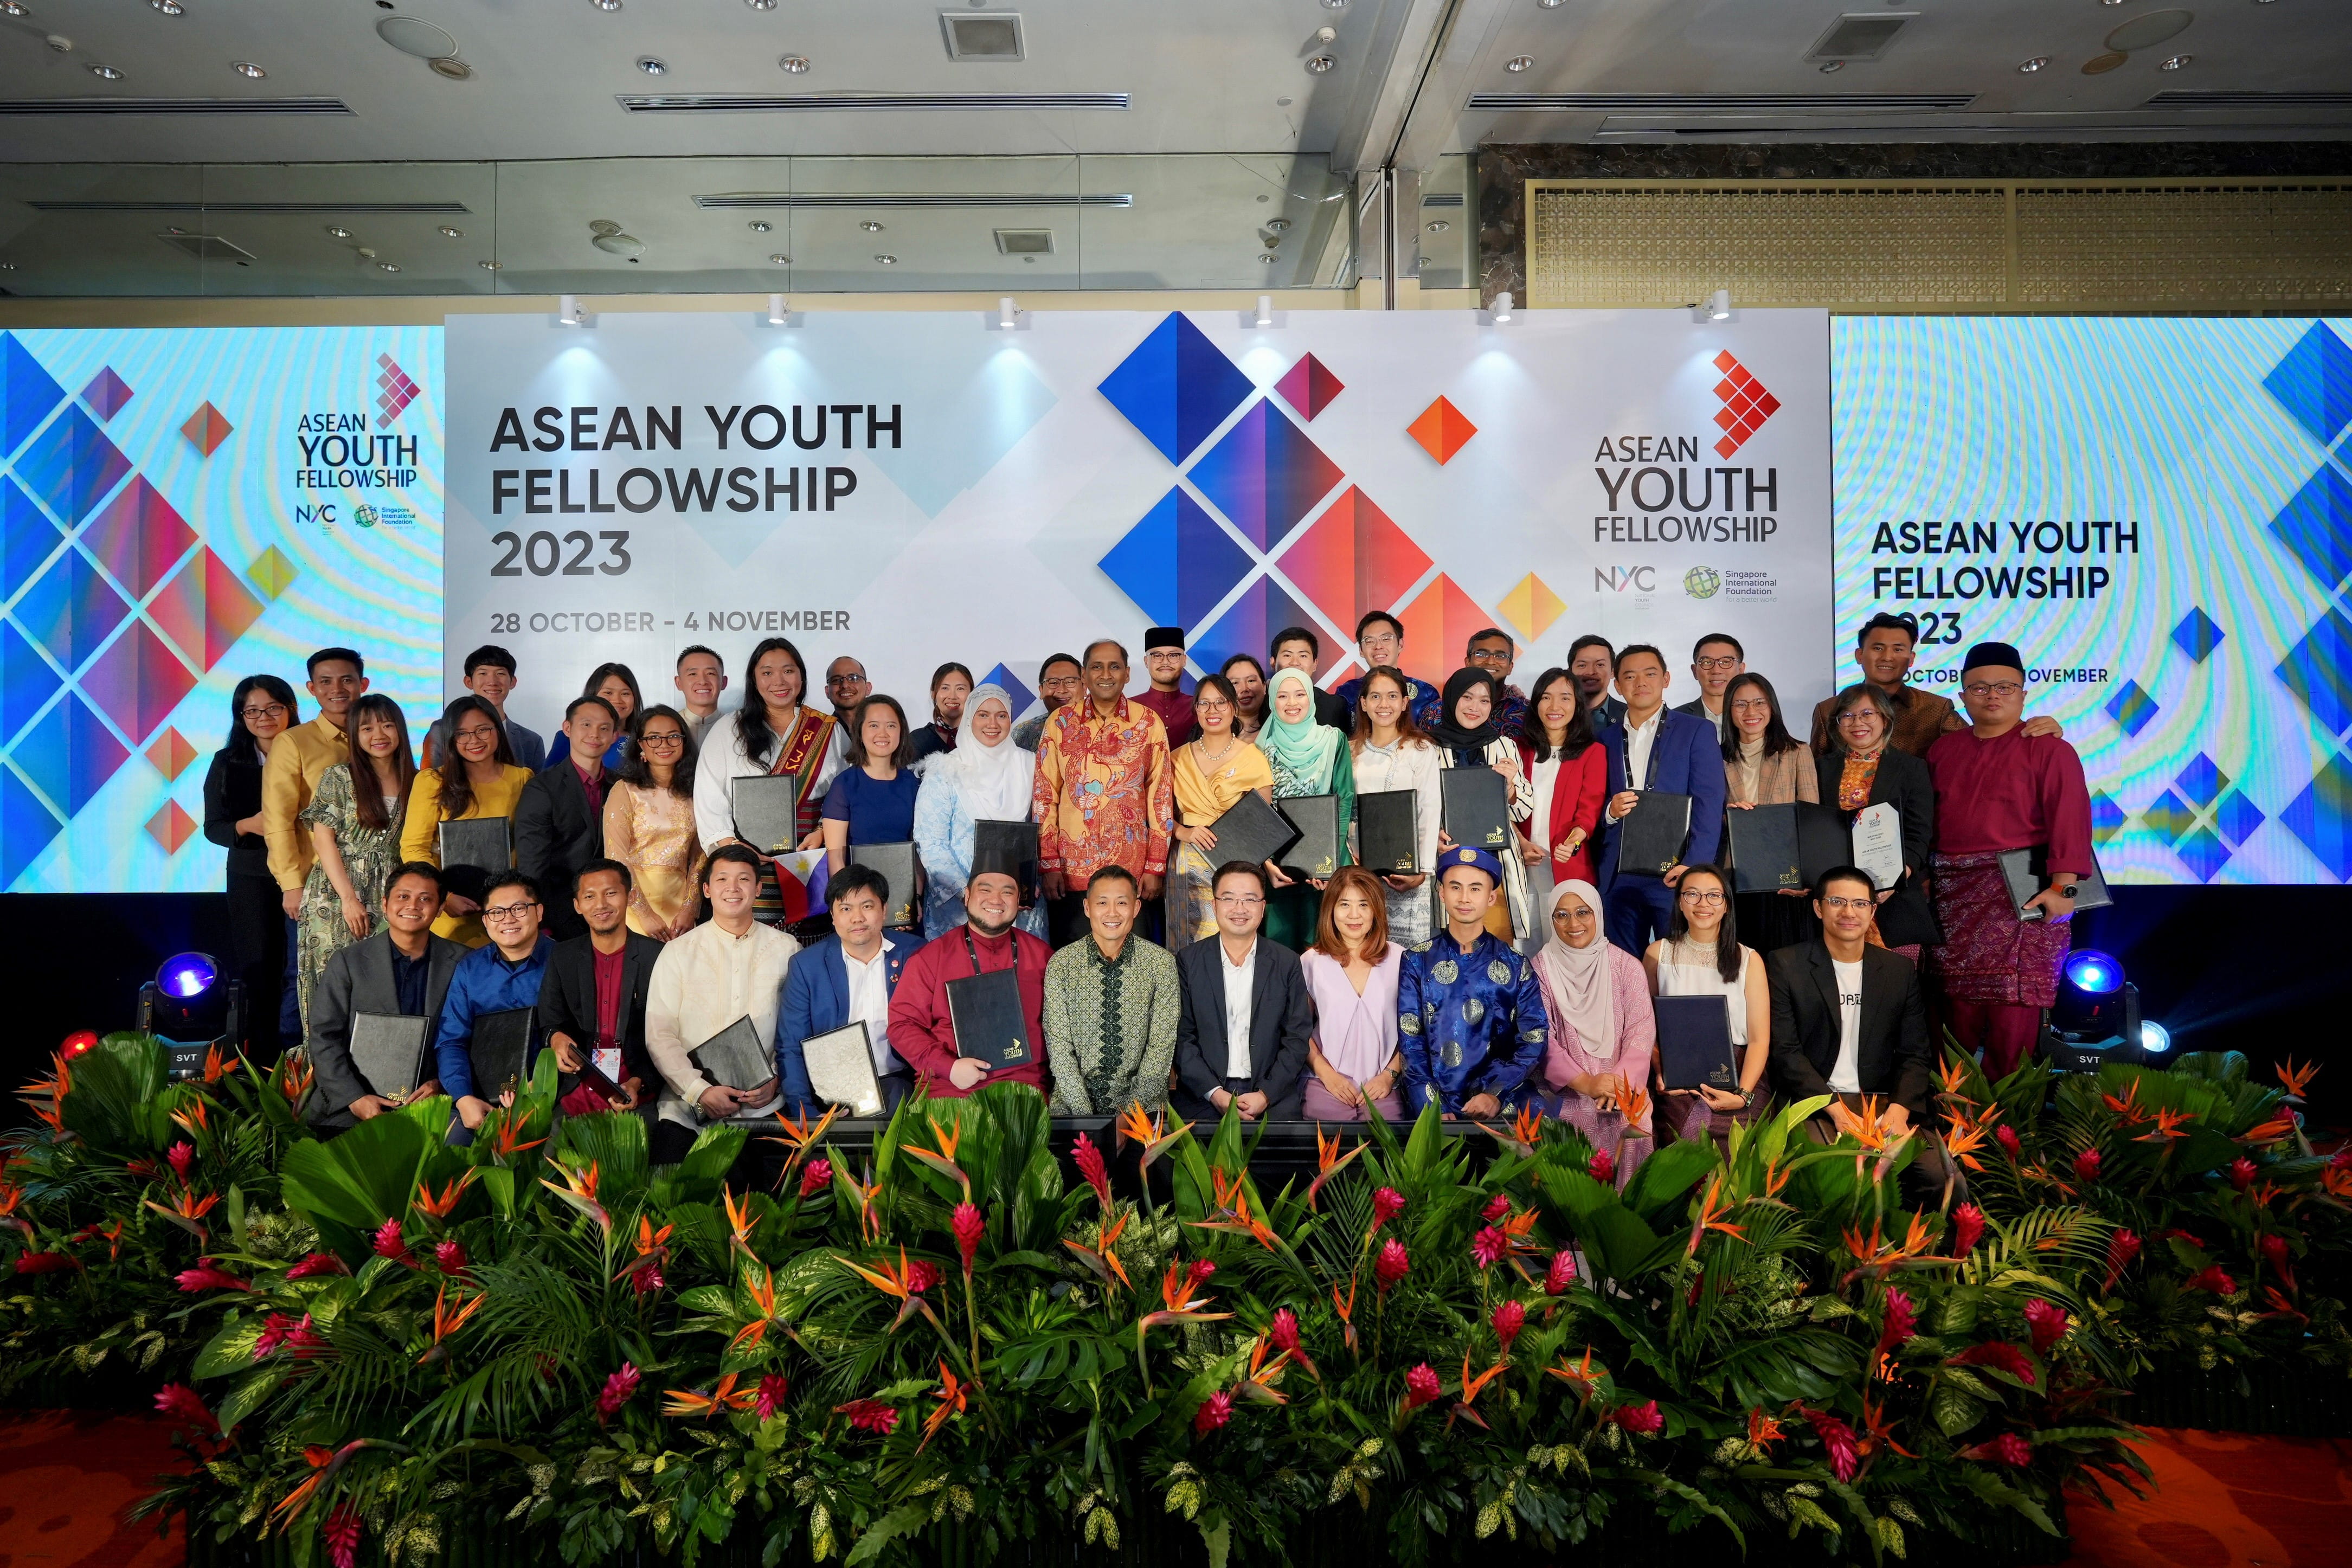 Group photo of the Fellows with Singapore’s Ambassador to the Socialist Republic of Vietnam Mr Jaya Ratnam